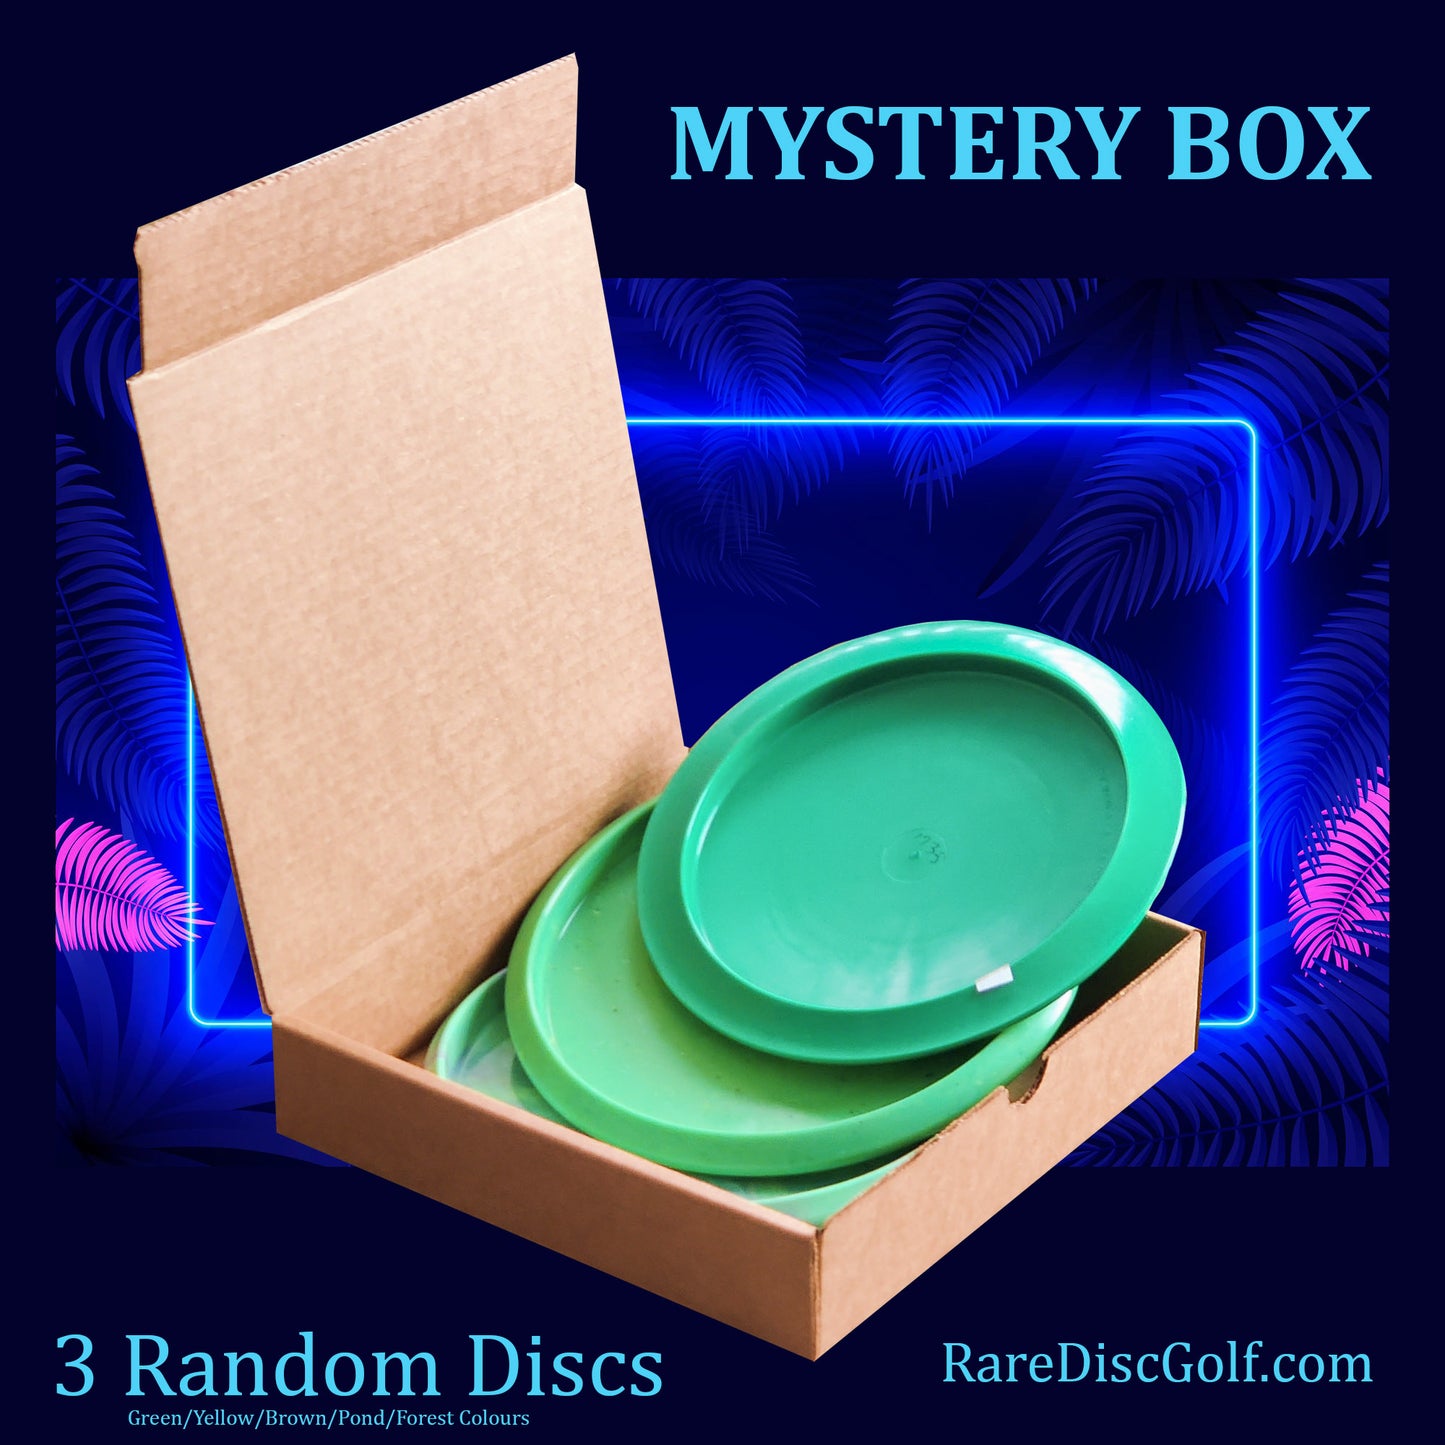 rare discs disc golf black friday mystery box green discs frisbee game sale